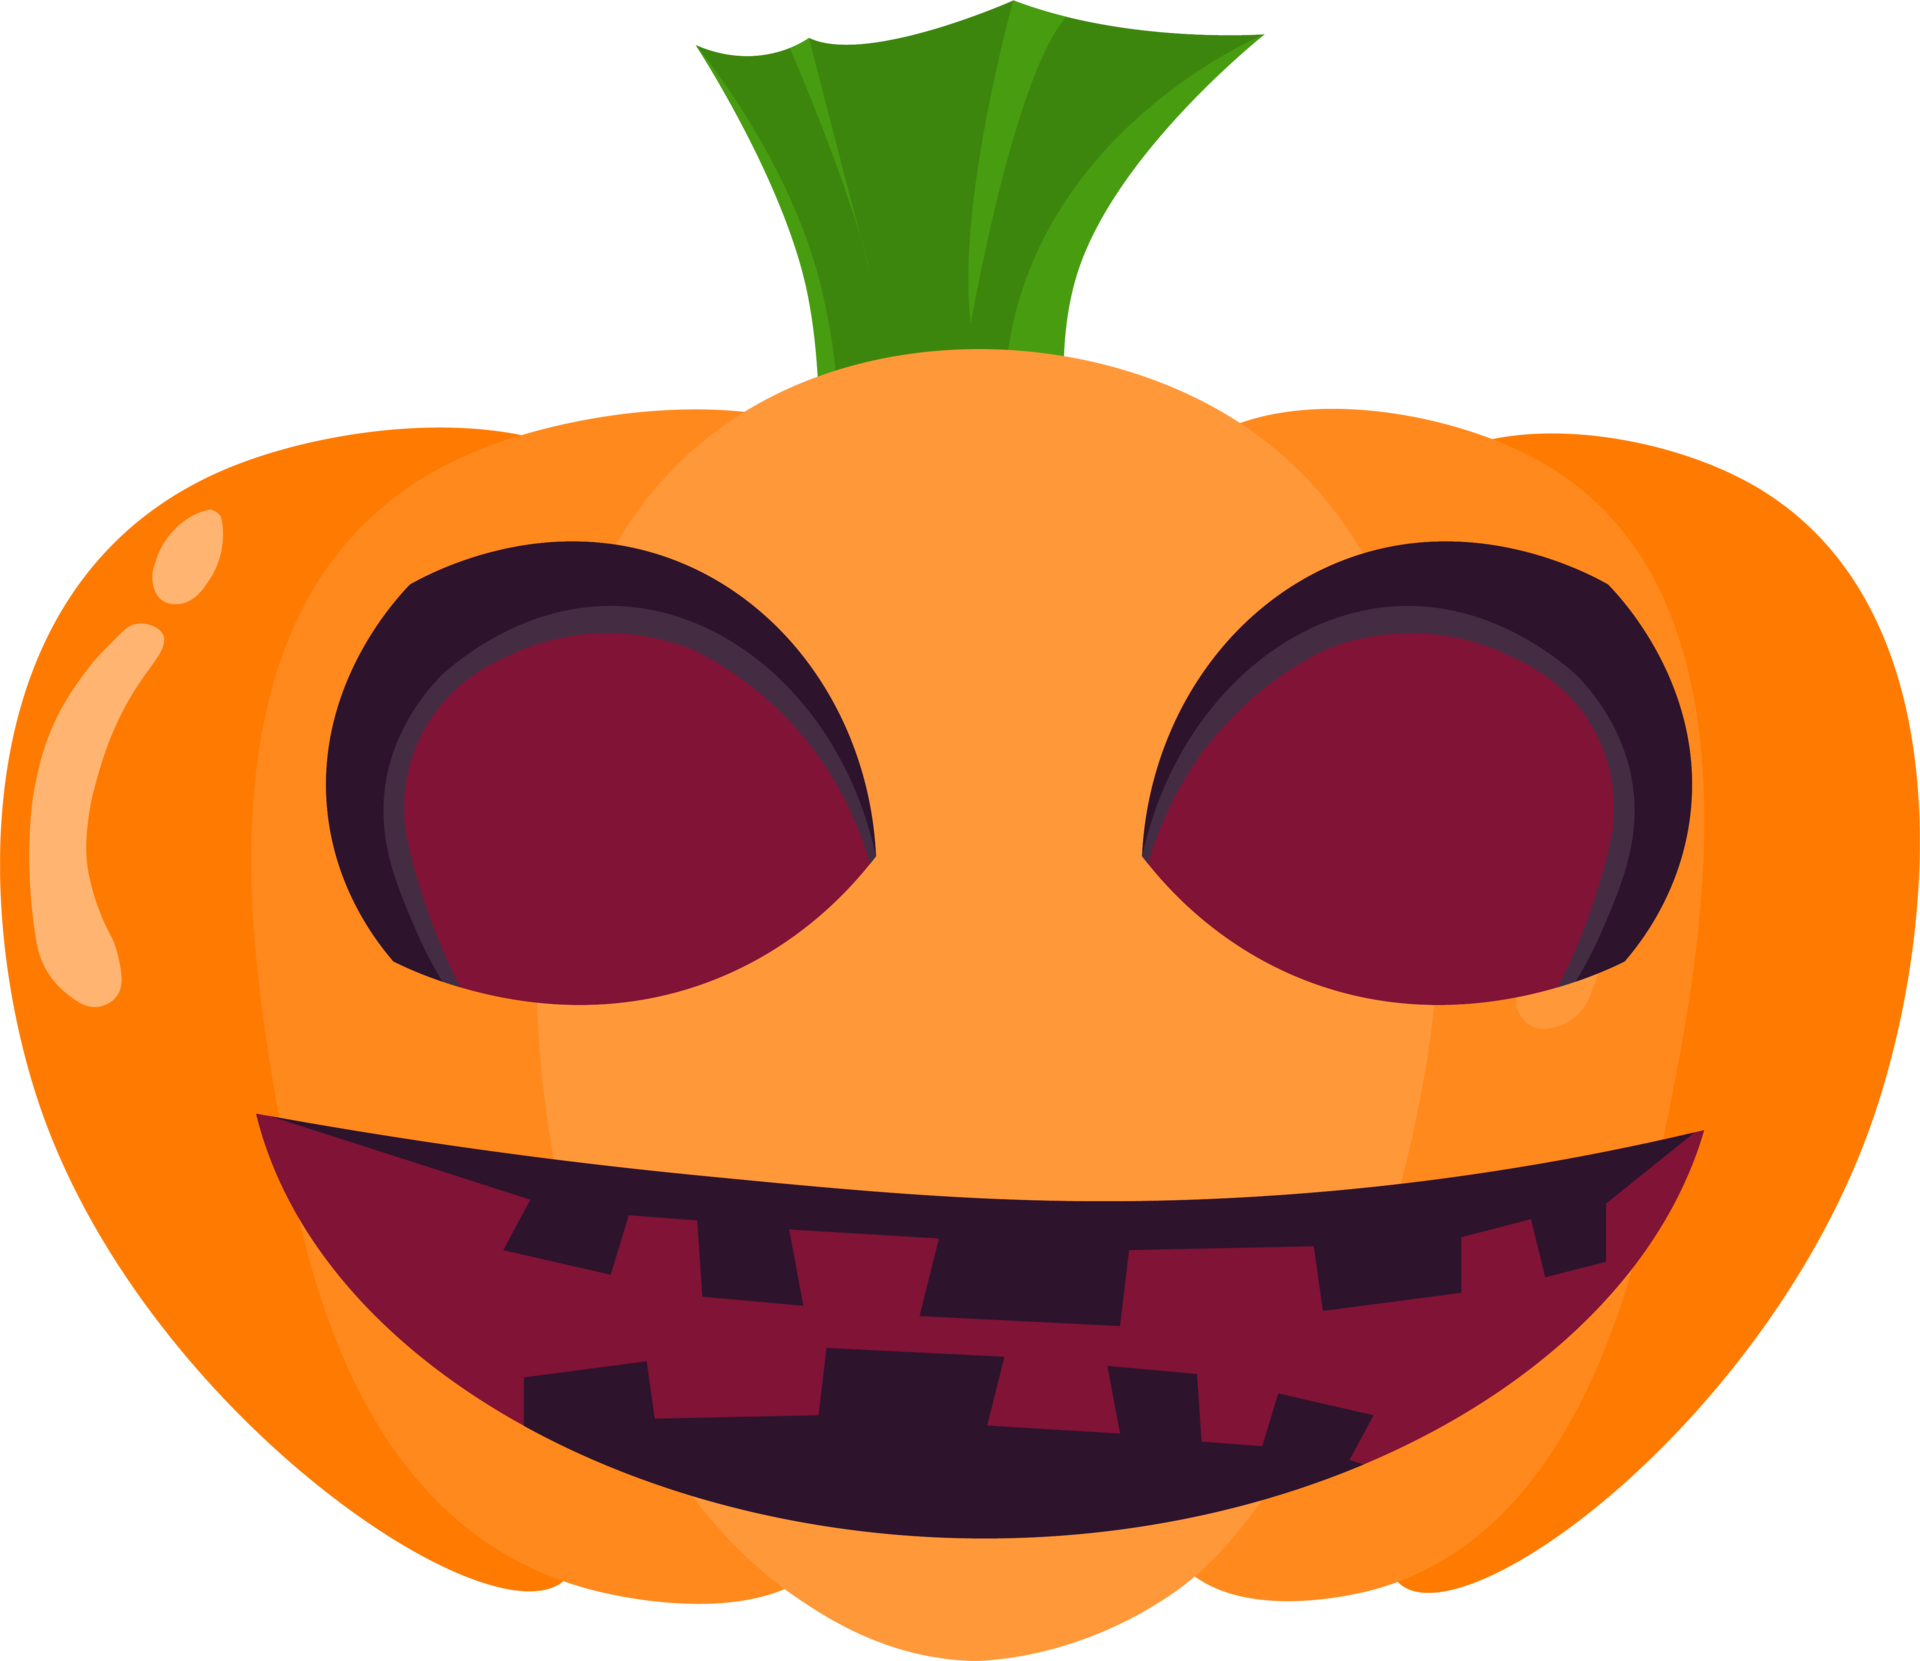 Cara assustadora de halloween tamanho grande de sorriso emoji